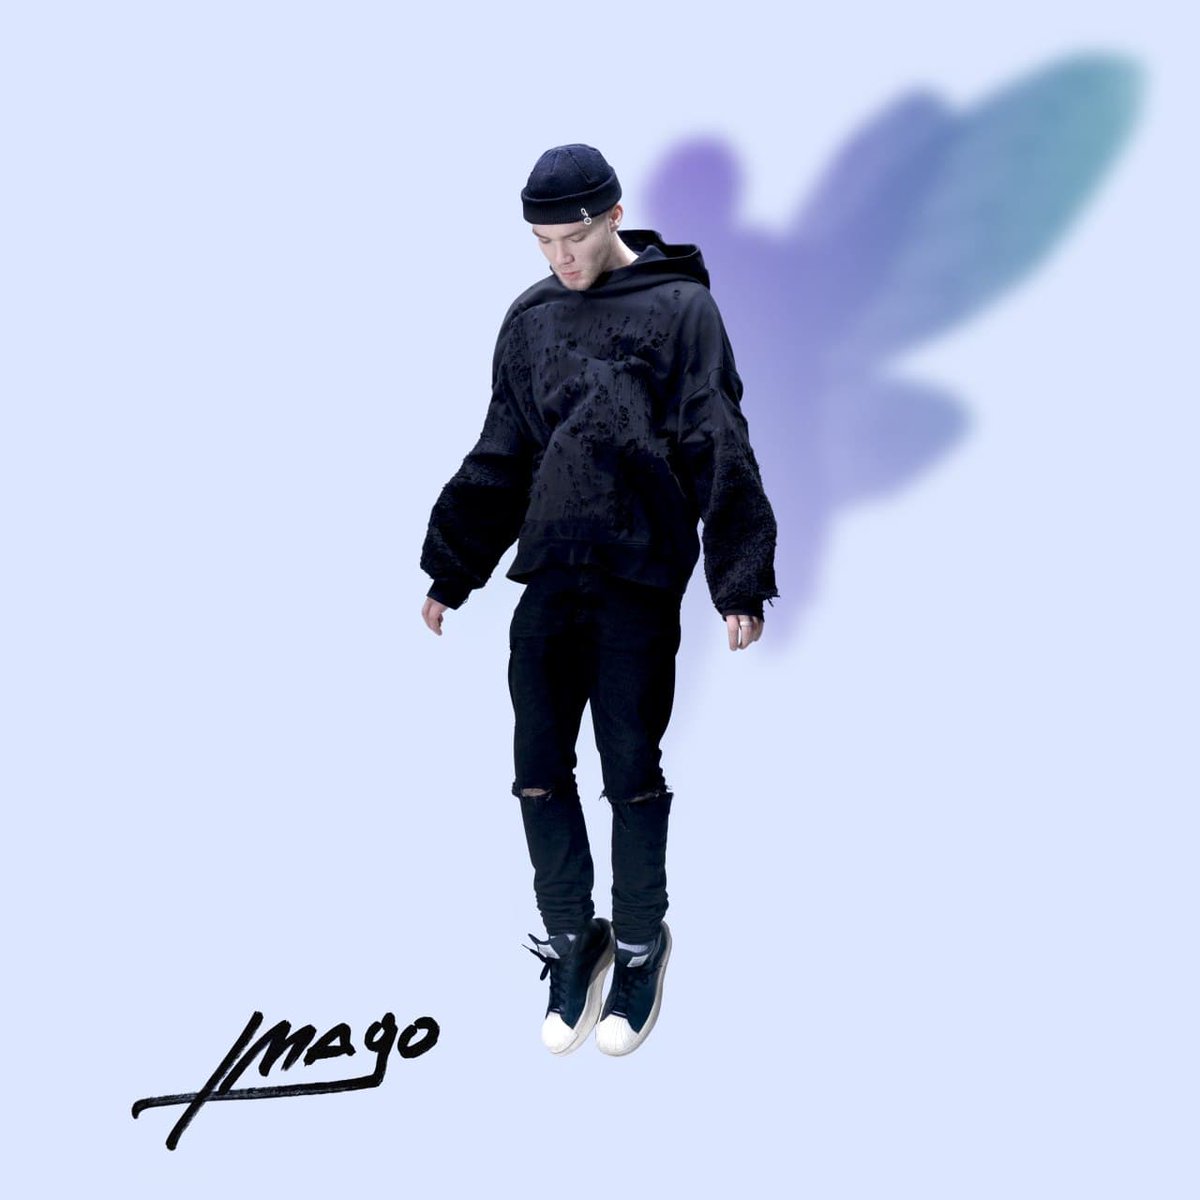 Куок – Imago [альбом 2022] t.me/quok_imago